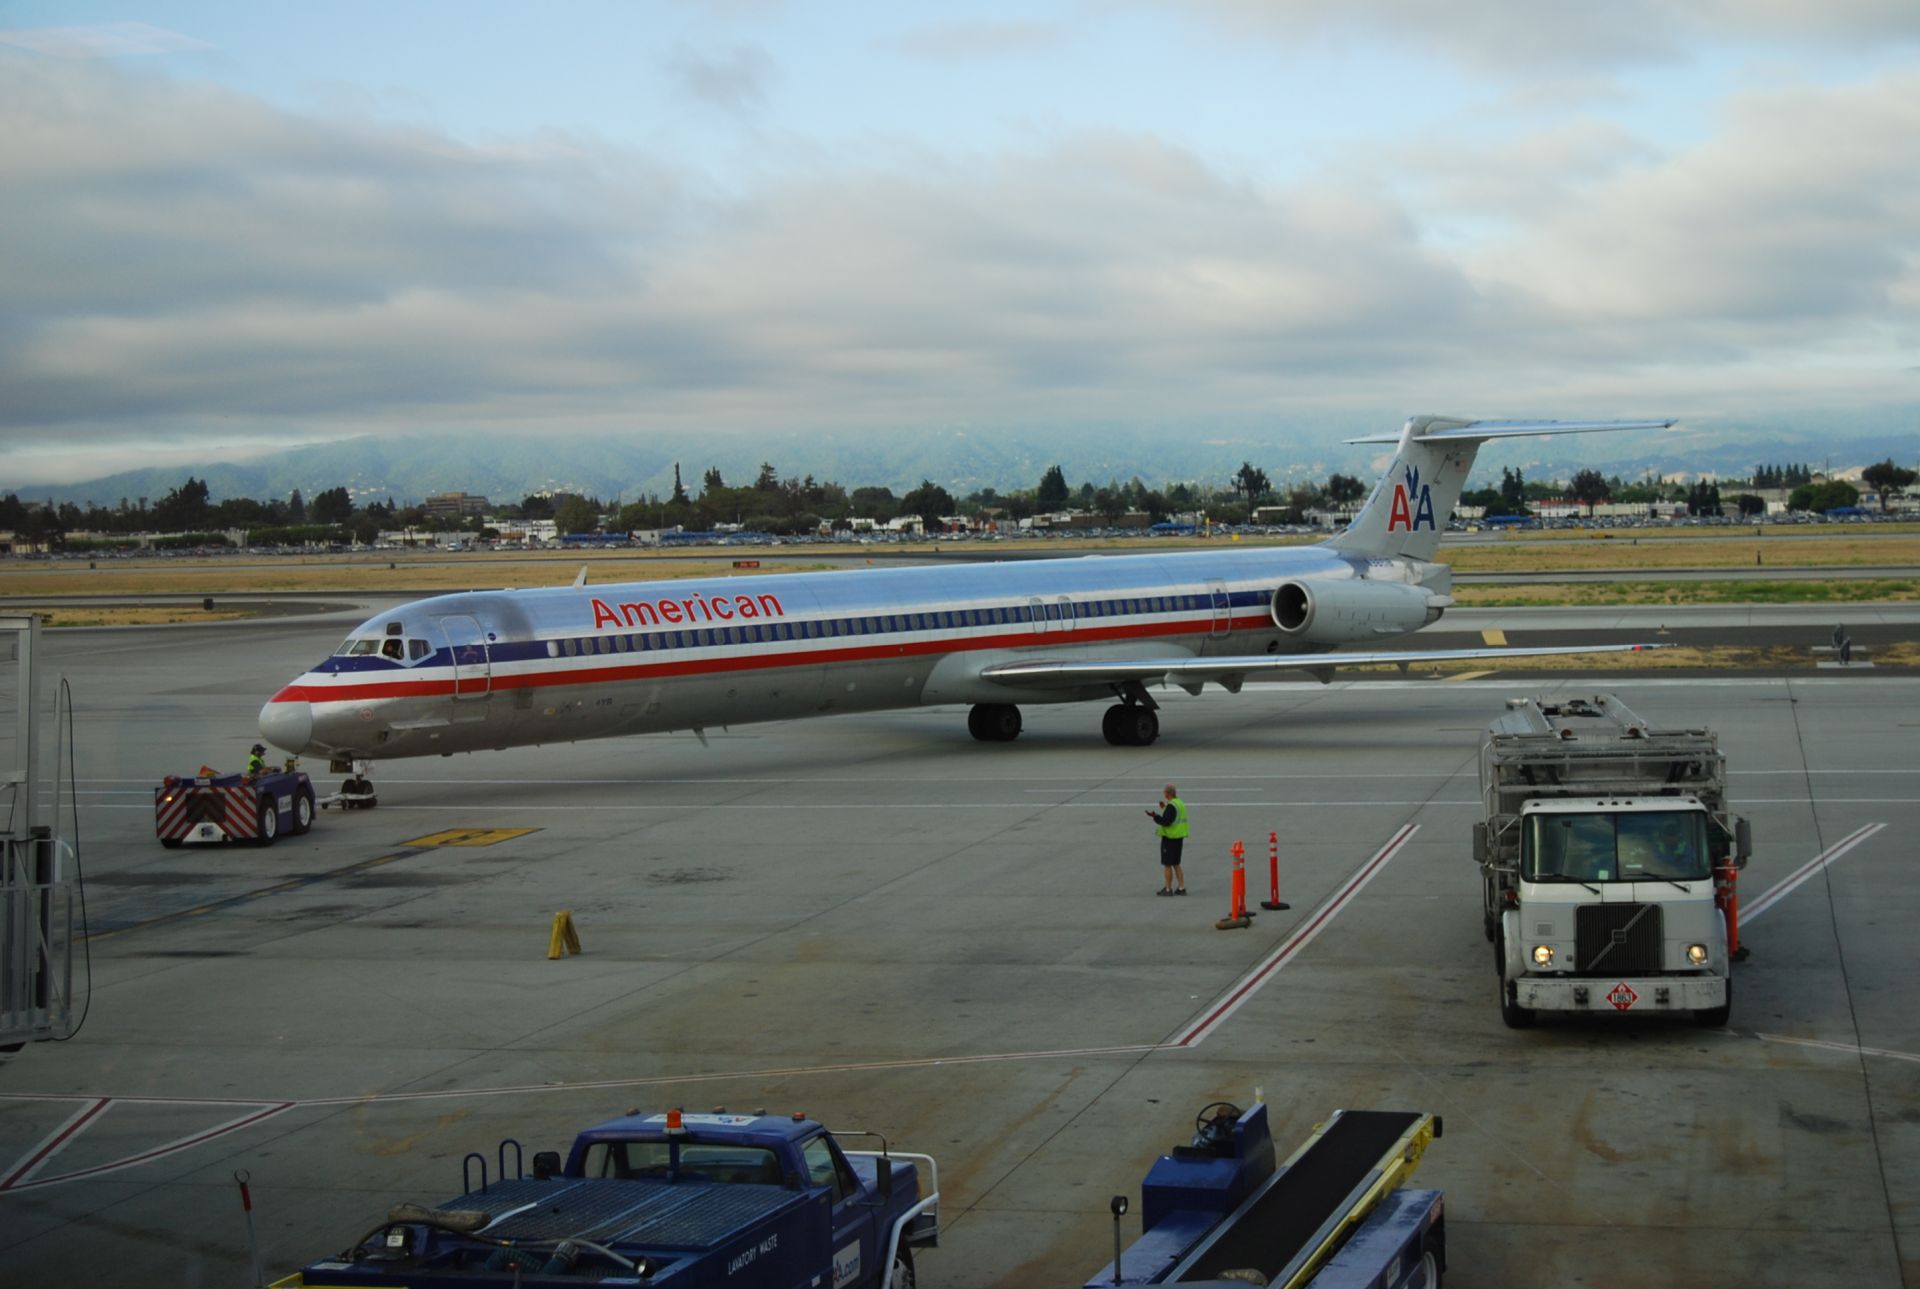 McDonell Douglas MD-80 společnosti American Airlines na letišti Dallas/Fort Worth. Foto: Bill Abbott [CC BY-SA 2.0 (https://creativecommons.org/licenses/by-sa/2.0)]